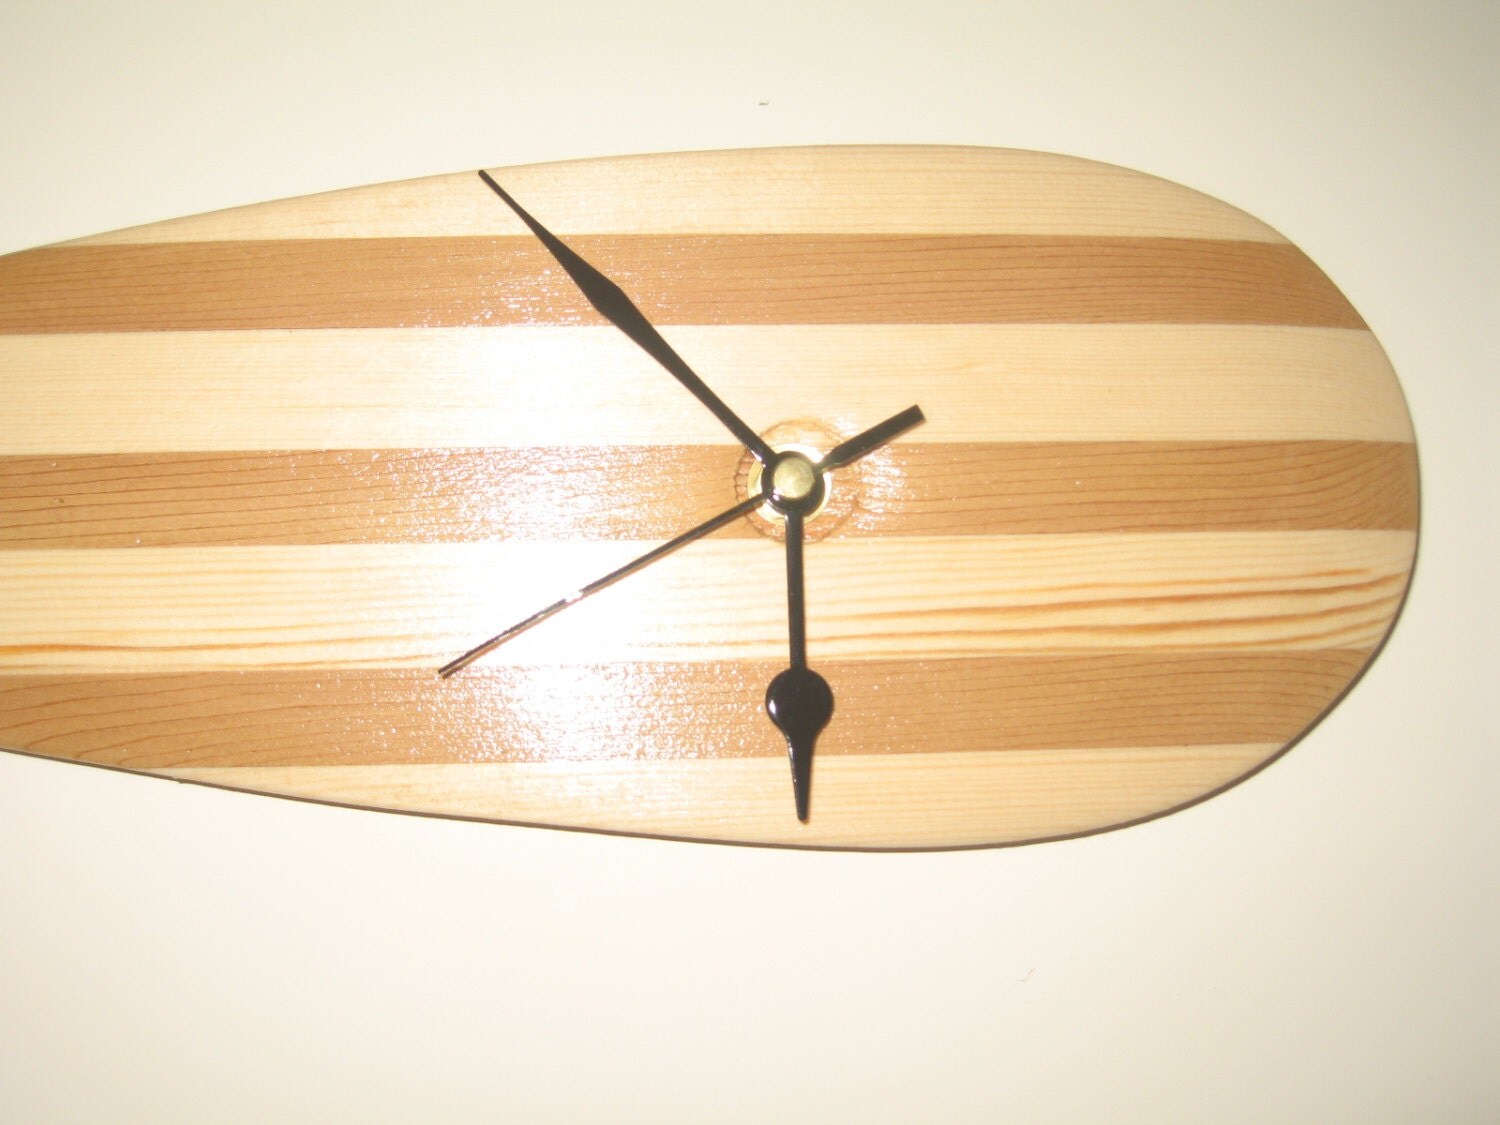 Wooden canoe paddle clock